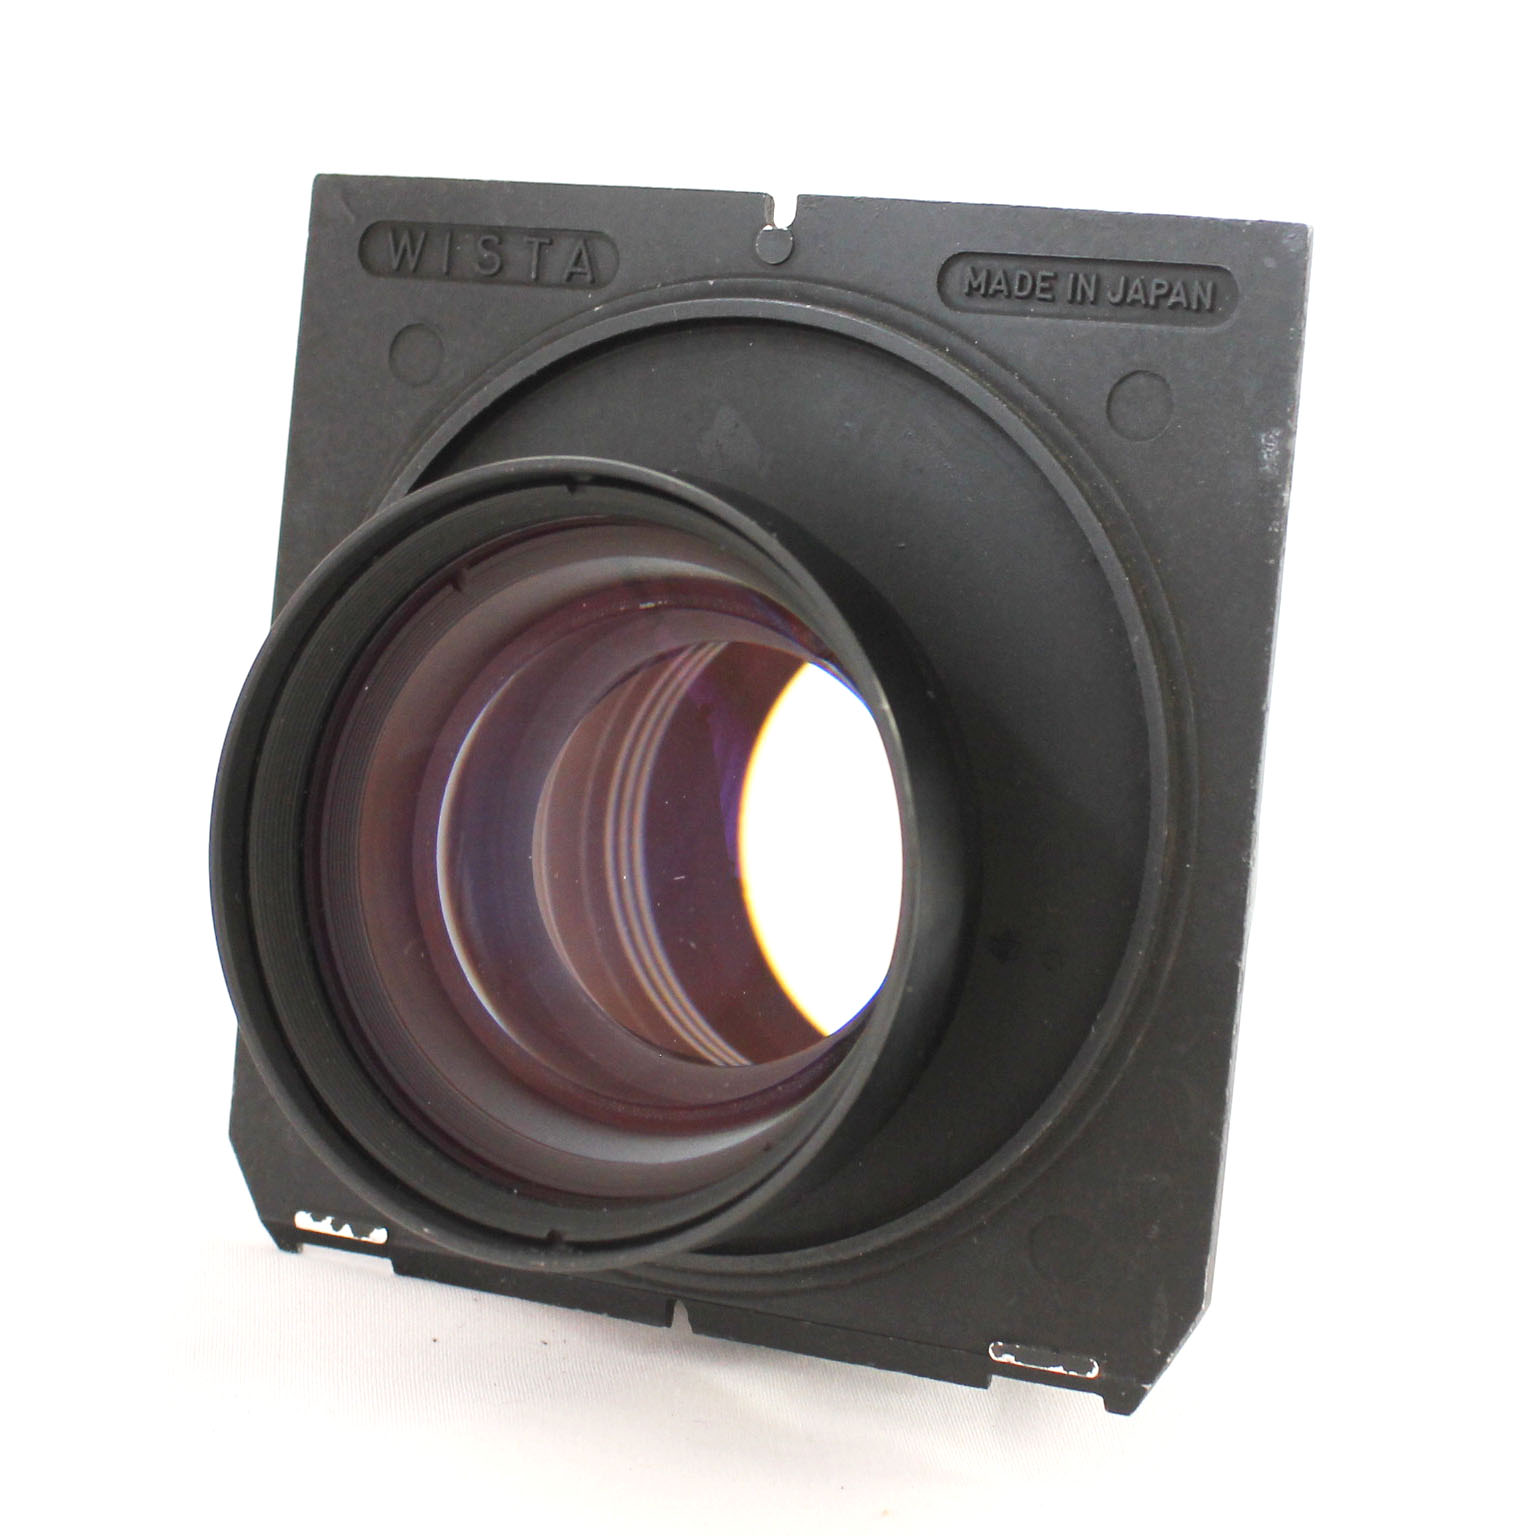 Carl Zeiss Planar 135mm F/3.5 T* 4x5 Lens Compur 1 Shutter w/ Wista Linhof Board from Japan Photo 2